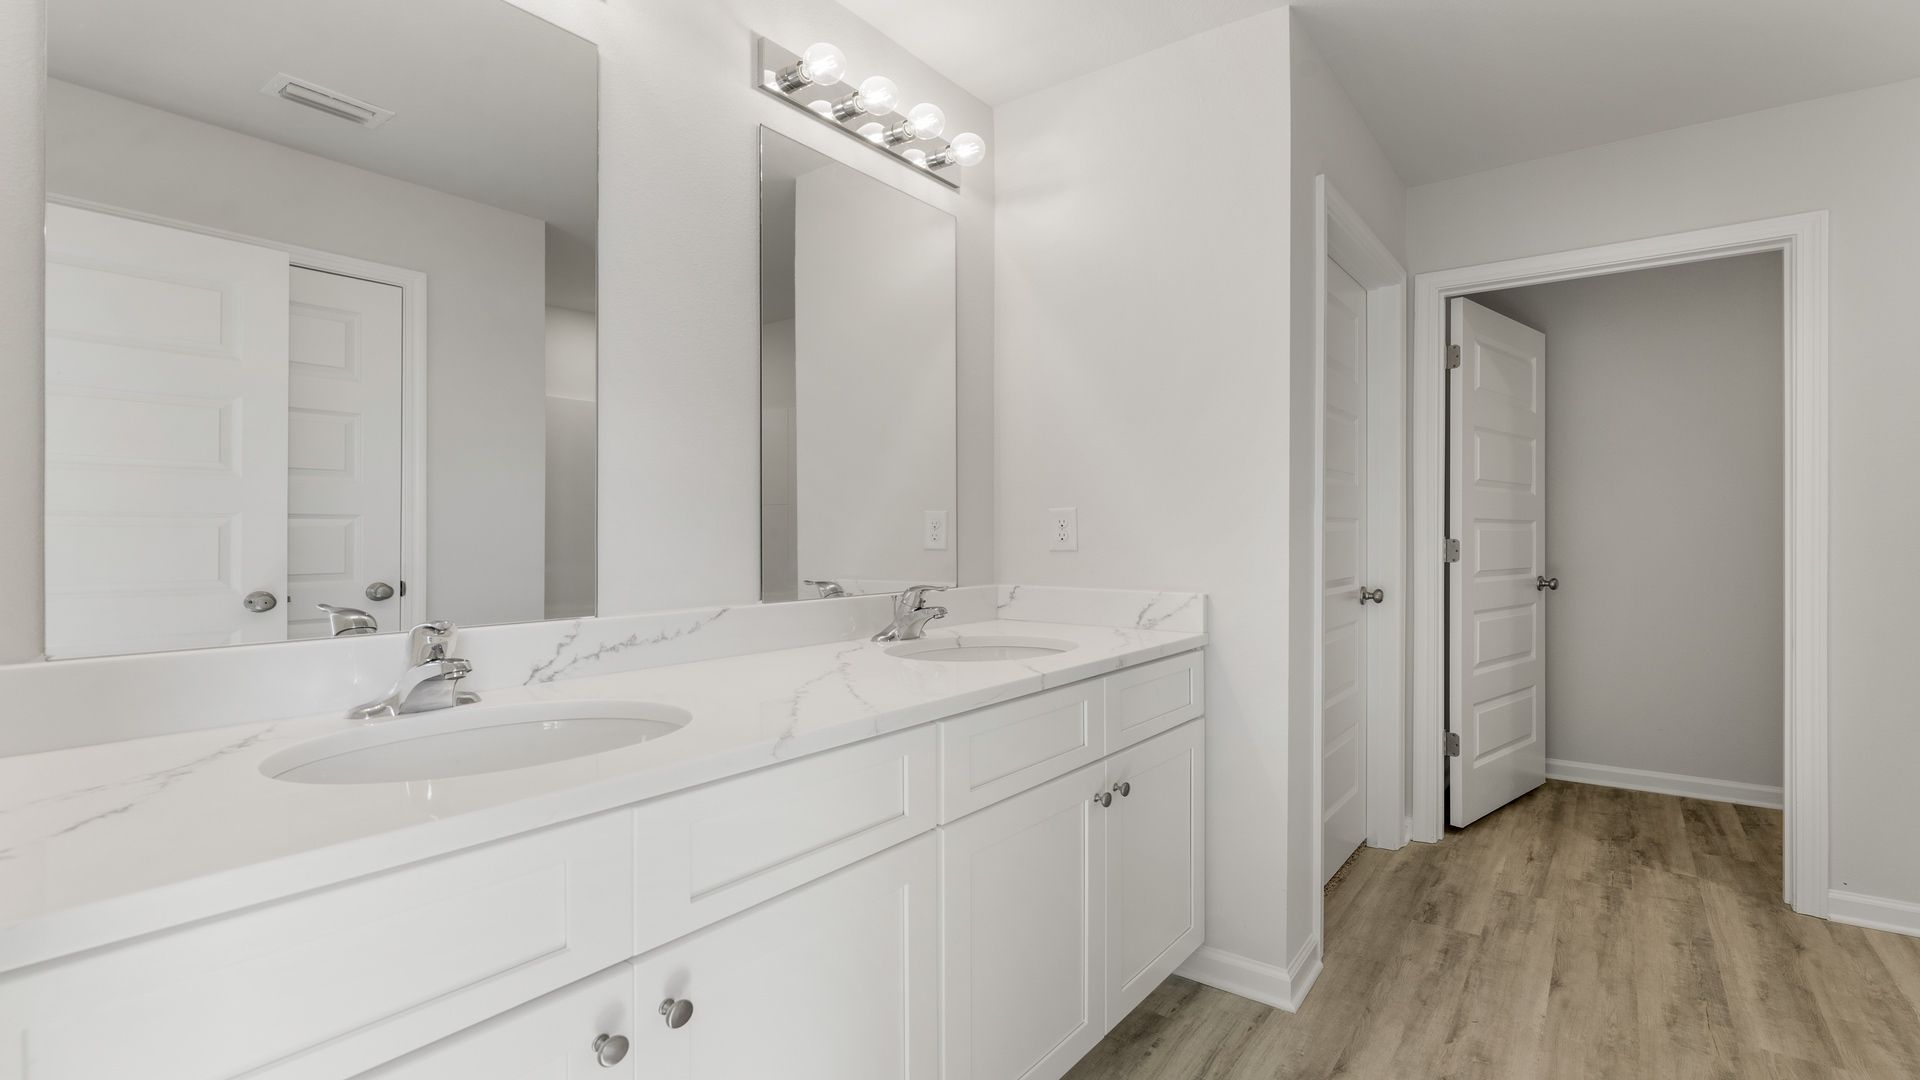 Primary bathroom with double vanity quartz countertops and EVP flooring and closet.